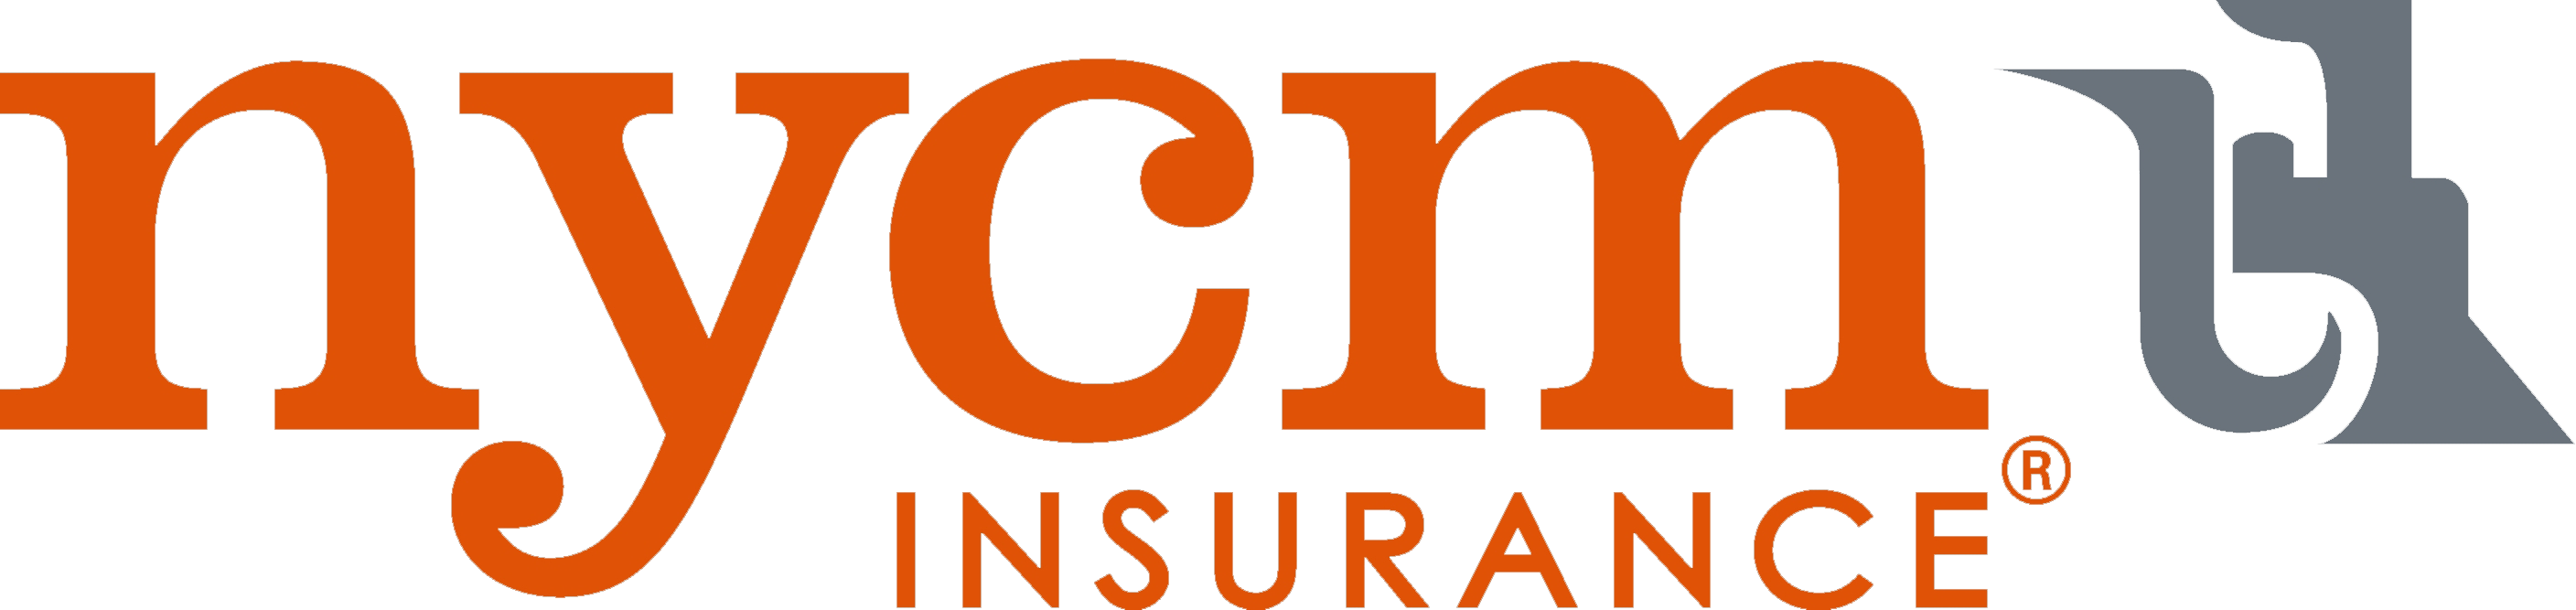 NYCM Insurance